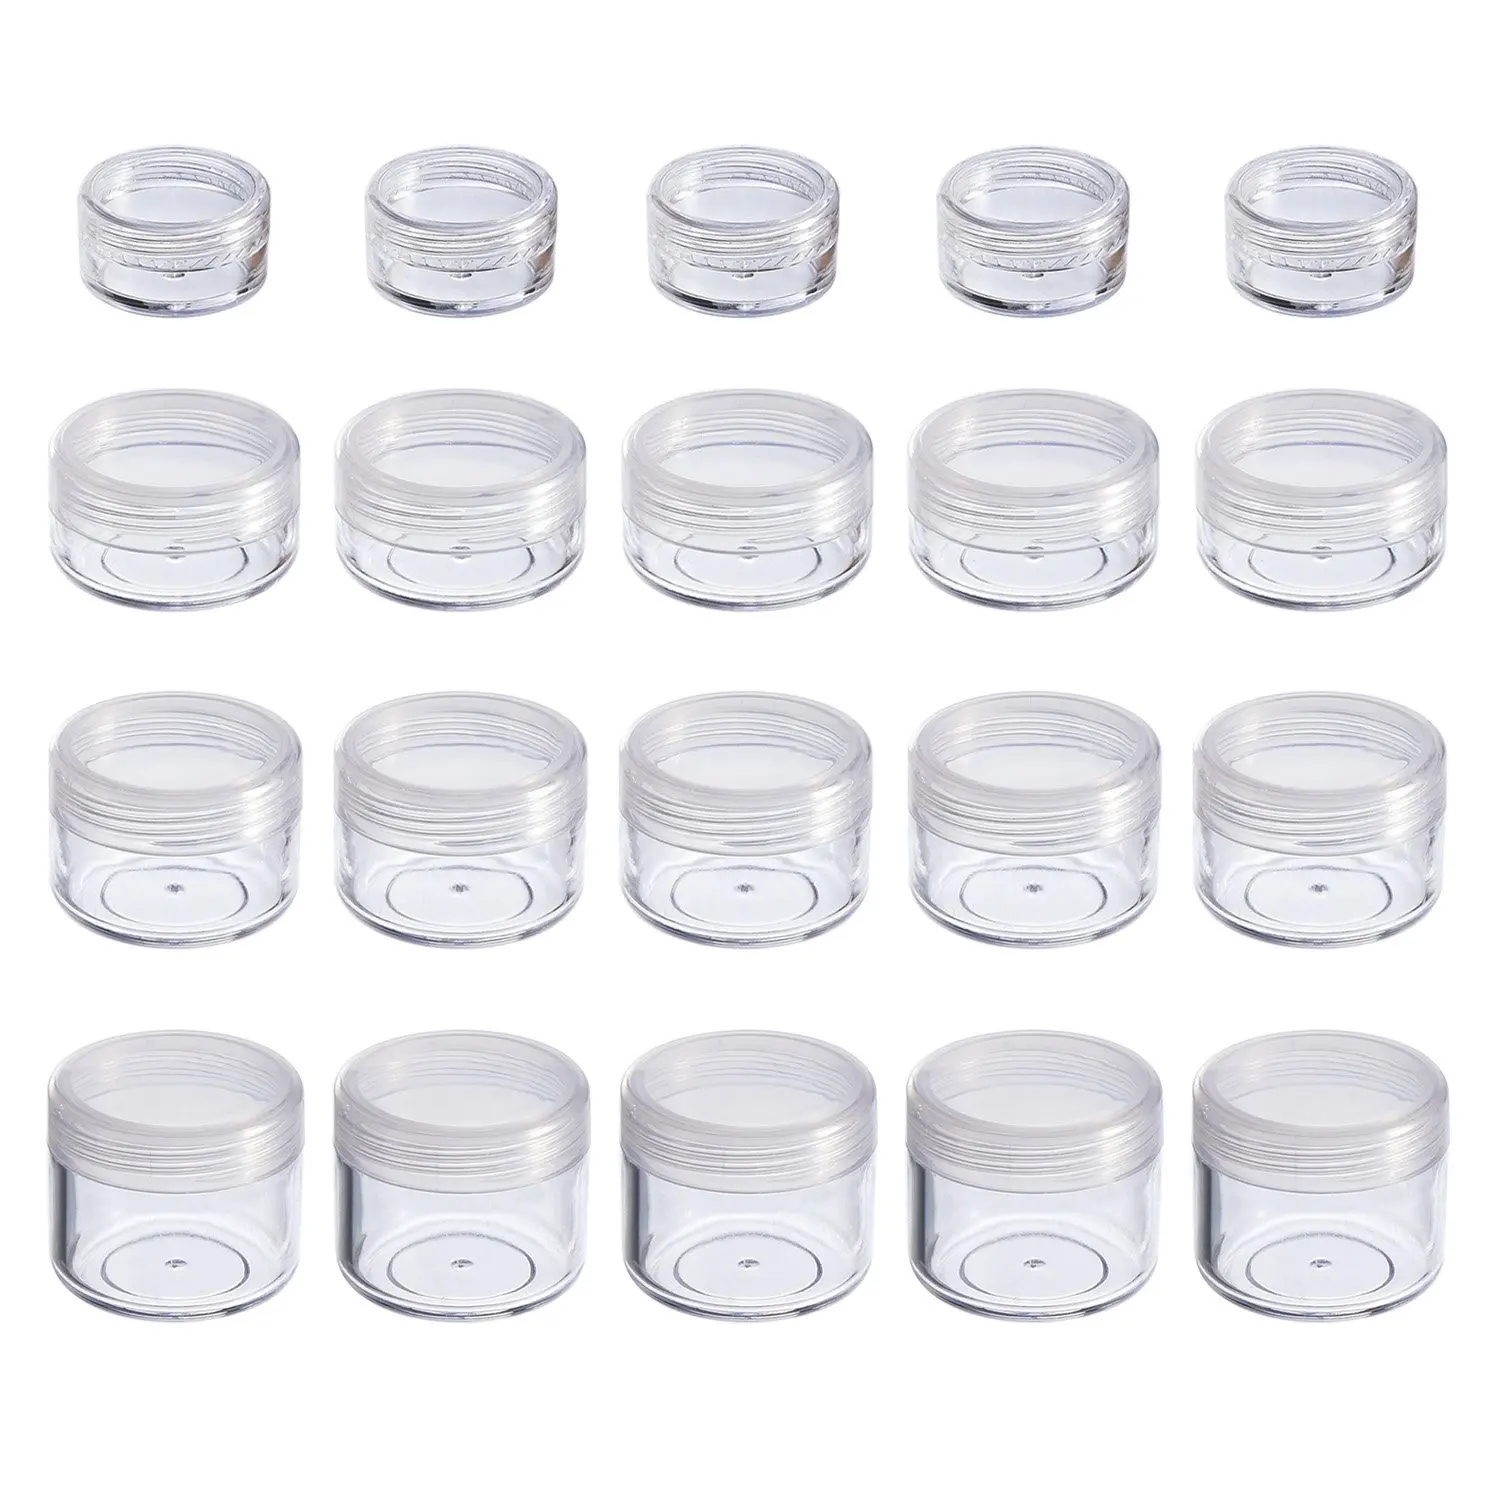 

100pcs 2g 3g 5g 10g 15g 20g Plastic Empty Clear Cosmetic Jars Makeup Container Lip Balm Lotion Bottles Vials Cream Pot Gel Box